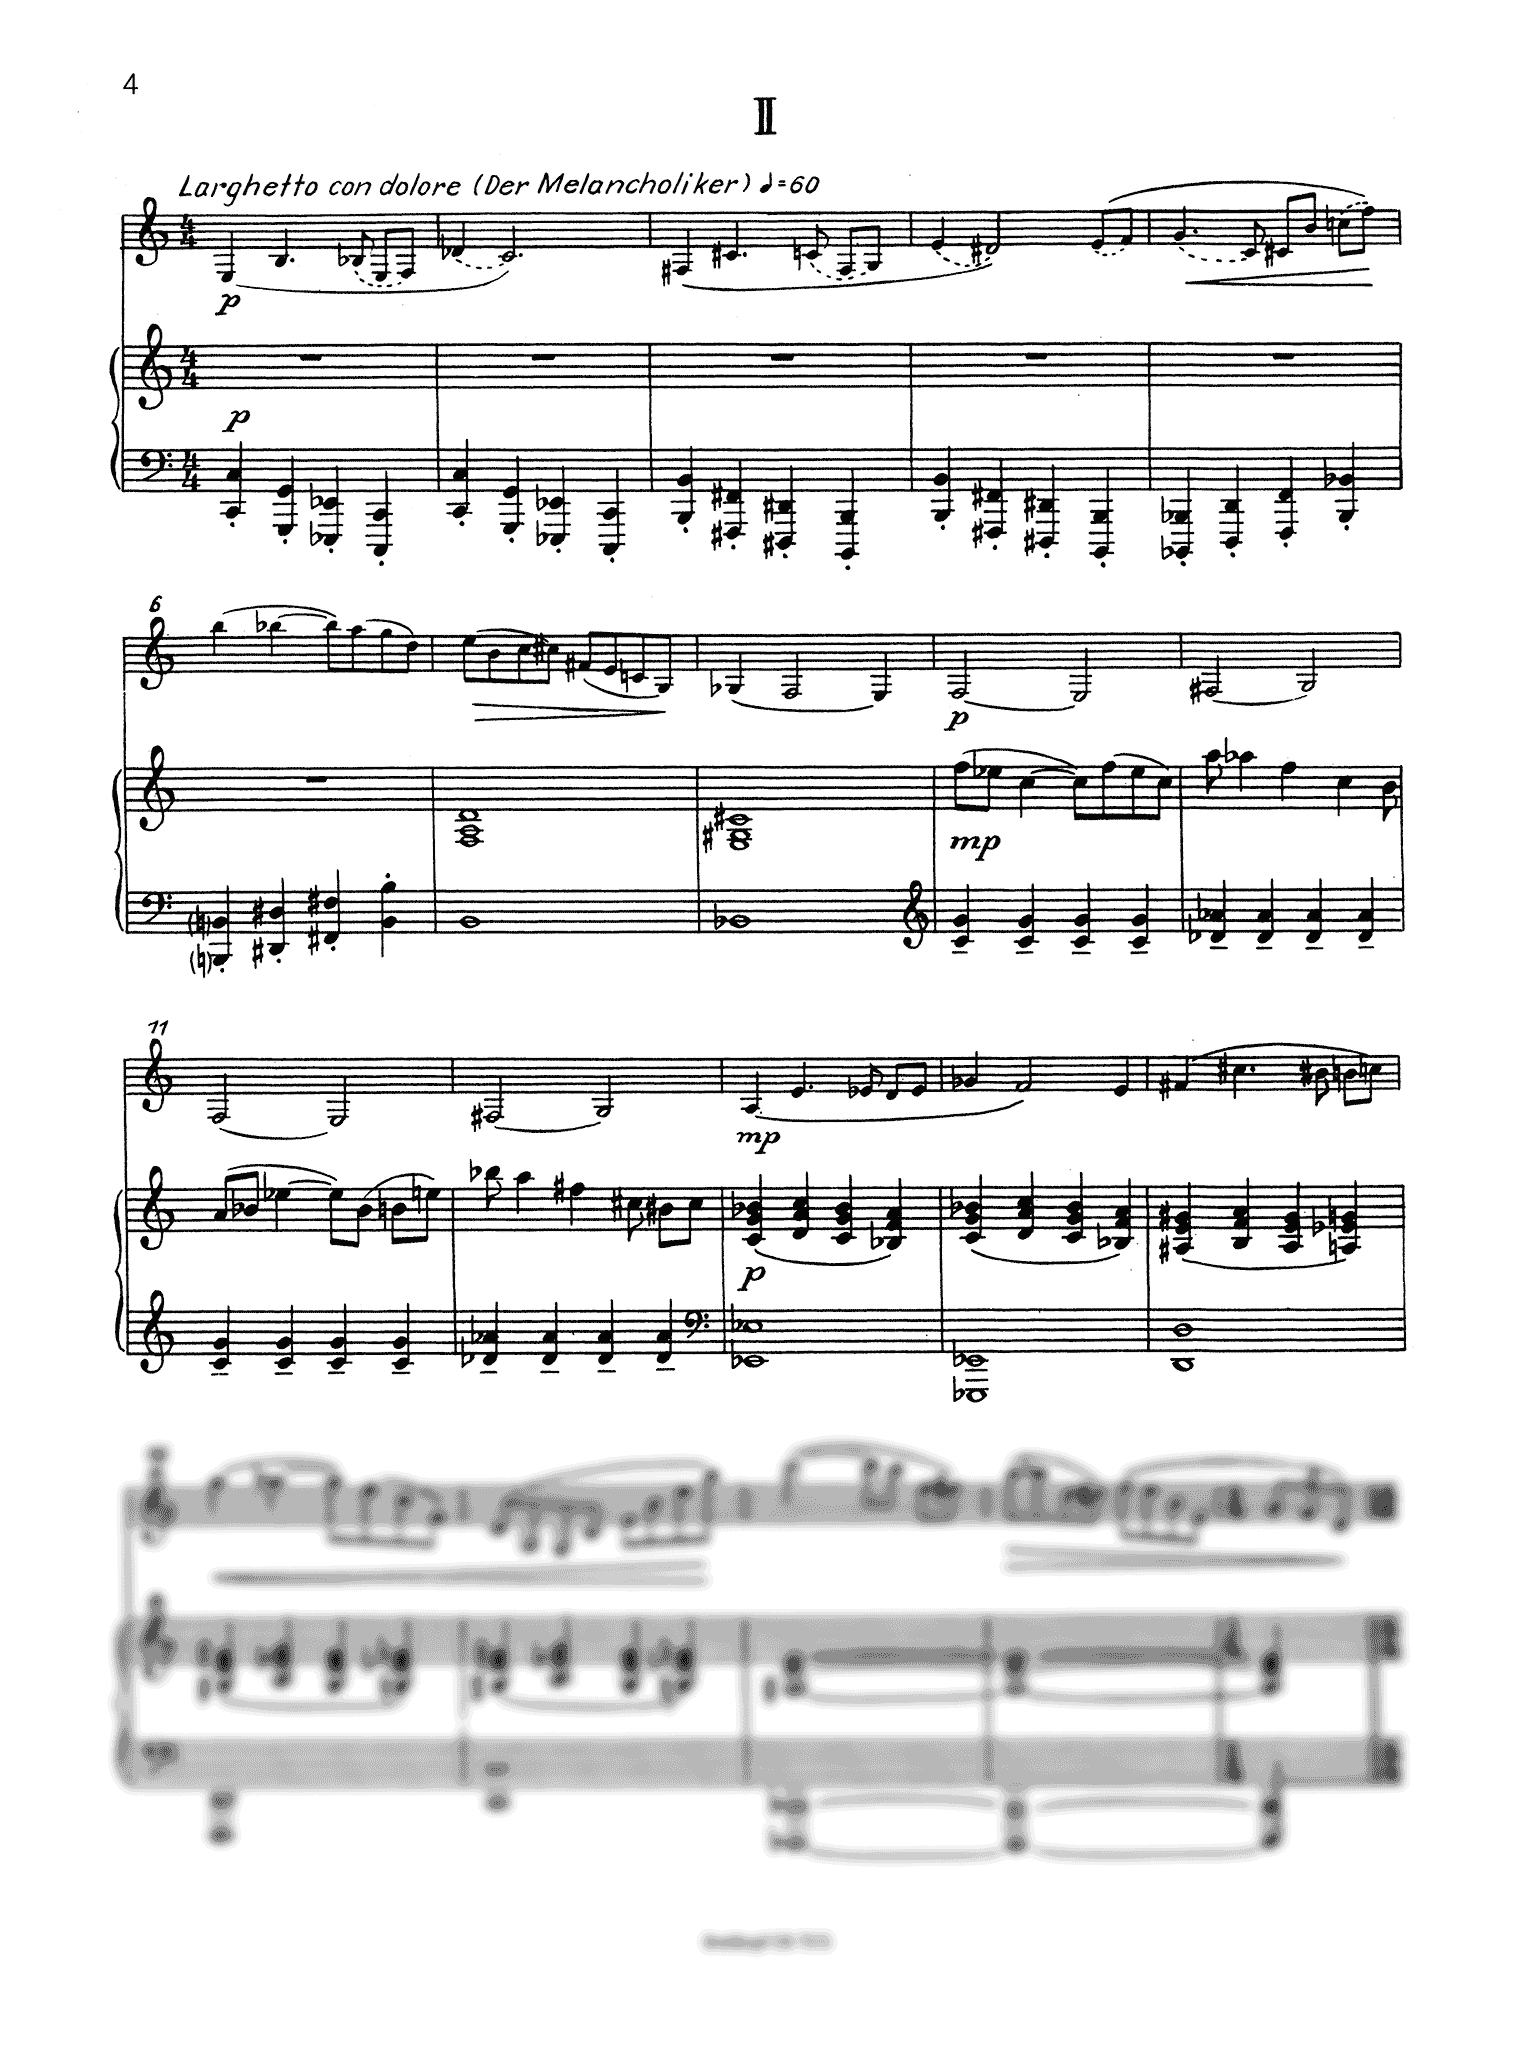 Habicht Clarinet Sonatina Temperamente - movement 2